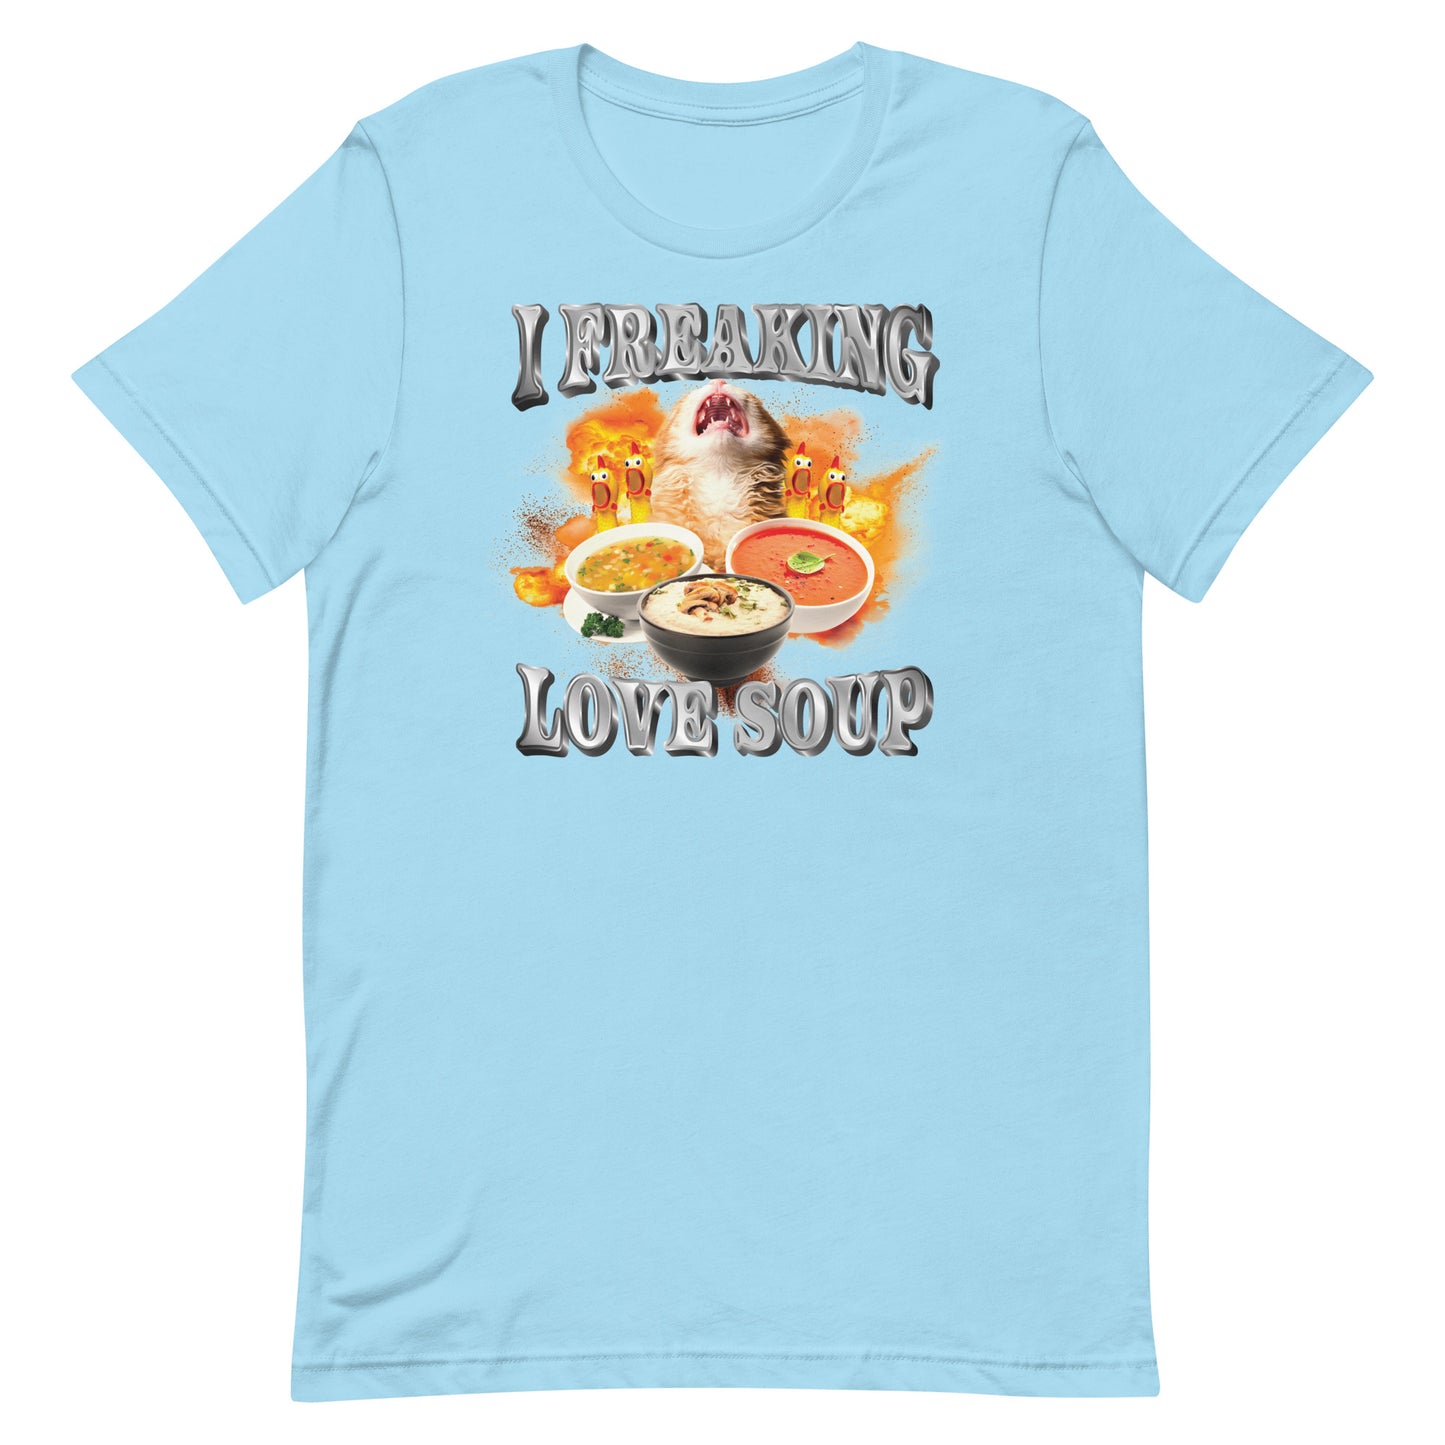 I Freaking Love Soup (Clean) Unisex t-shirt